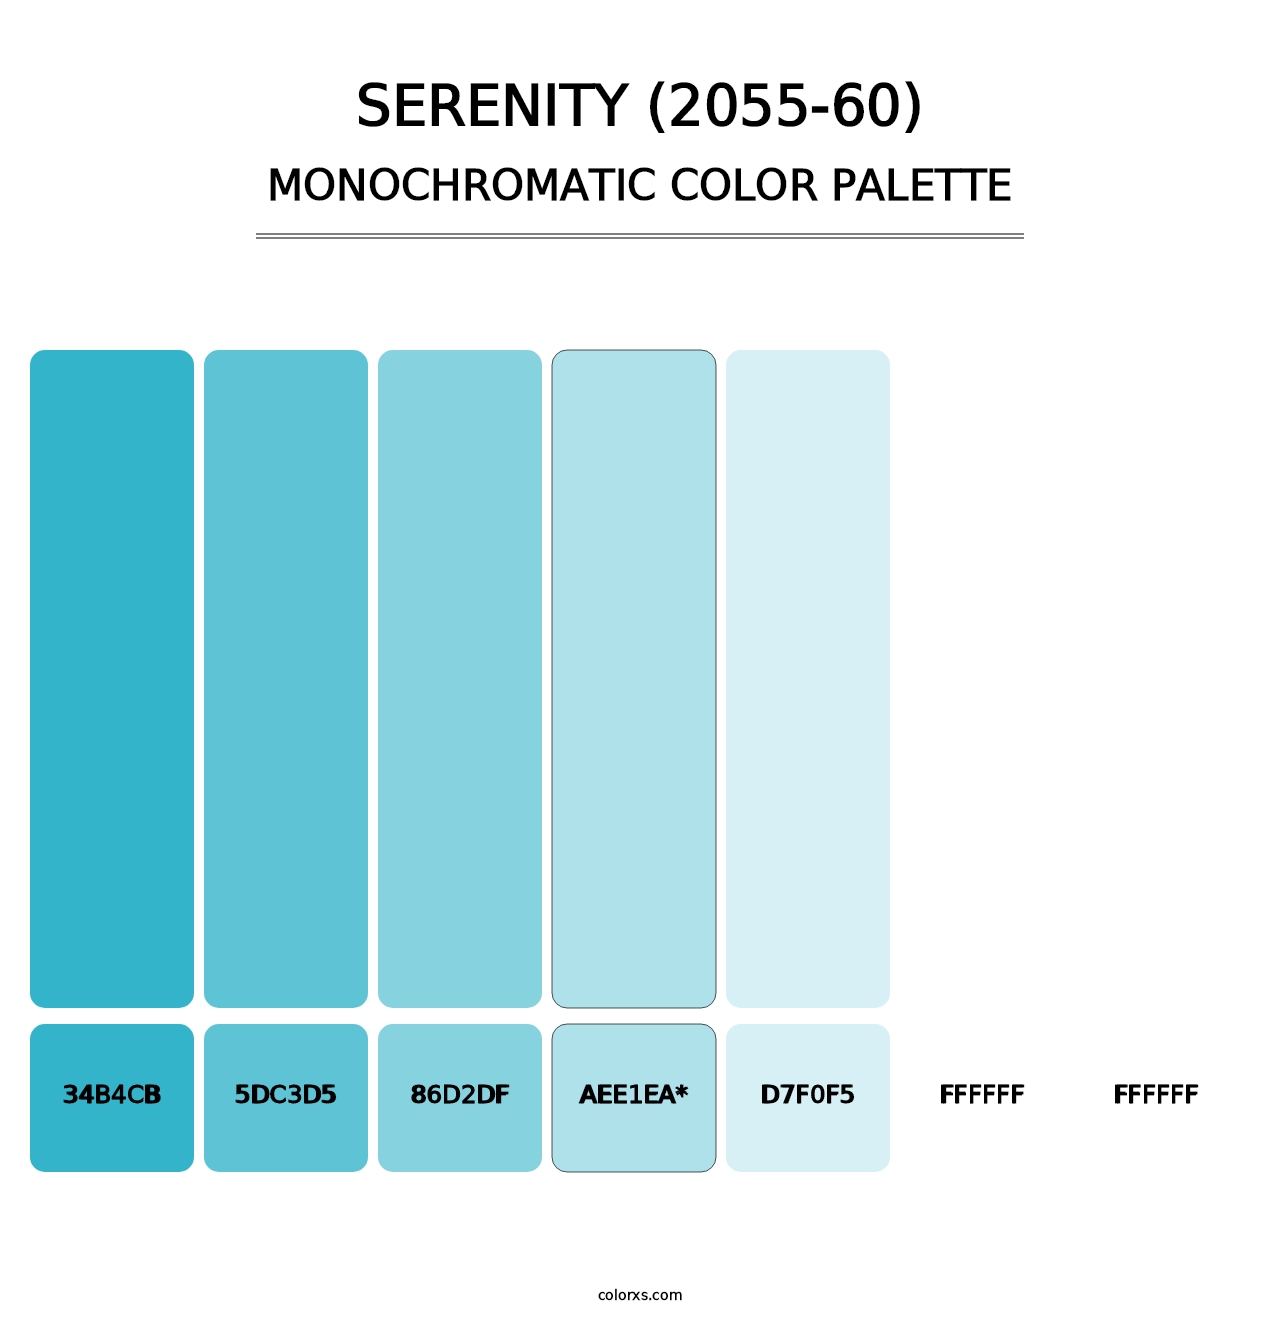 Serenity (2055-60) - Monochromatic Color Palette